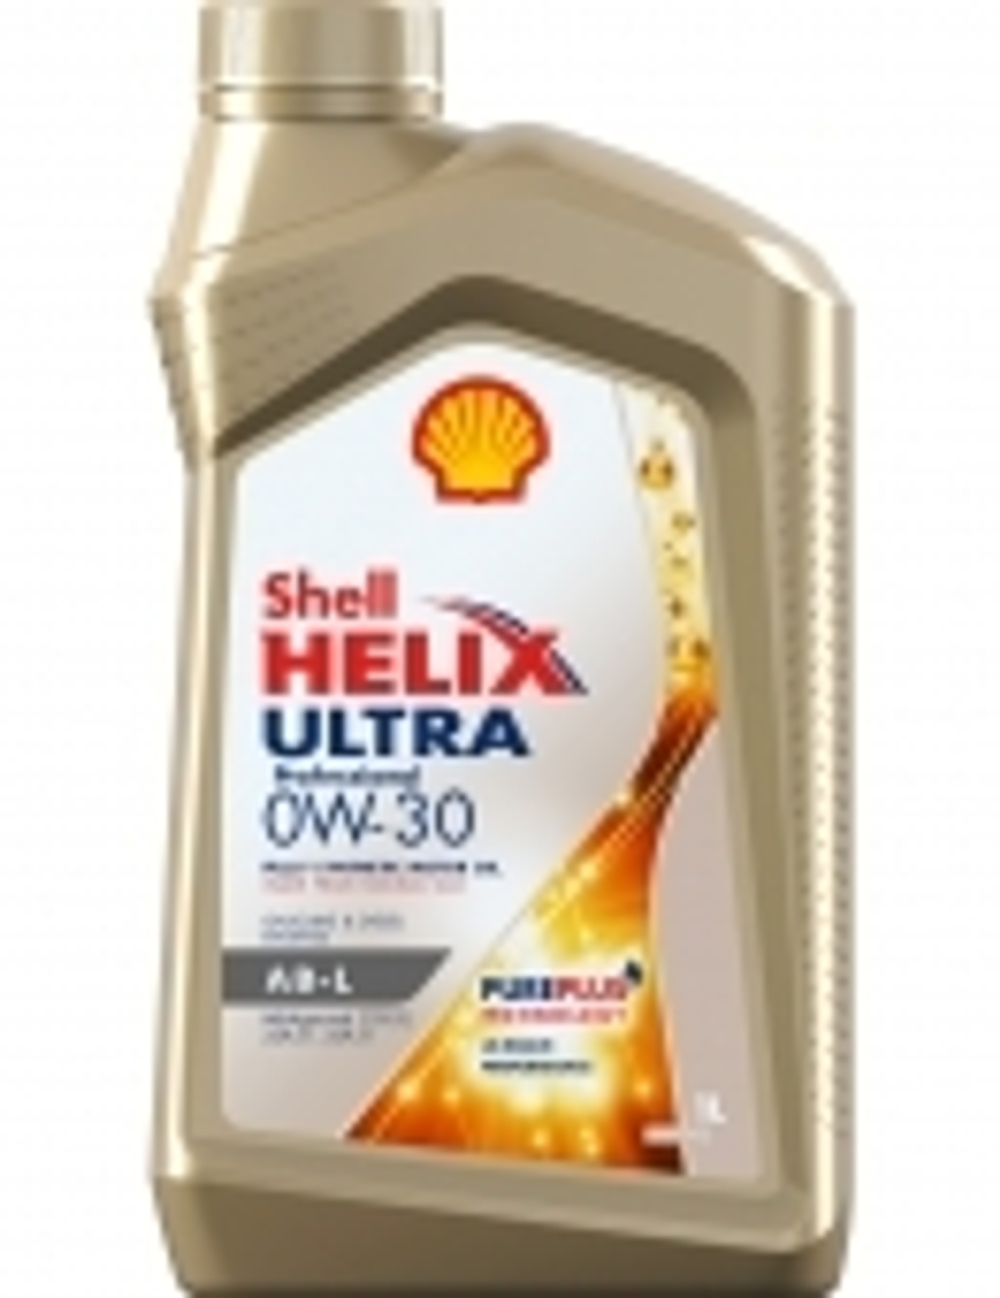 Shell Helix Ultra Professional AB-L 0W-30 209 л